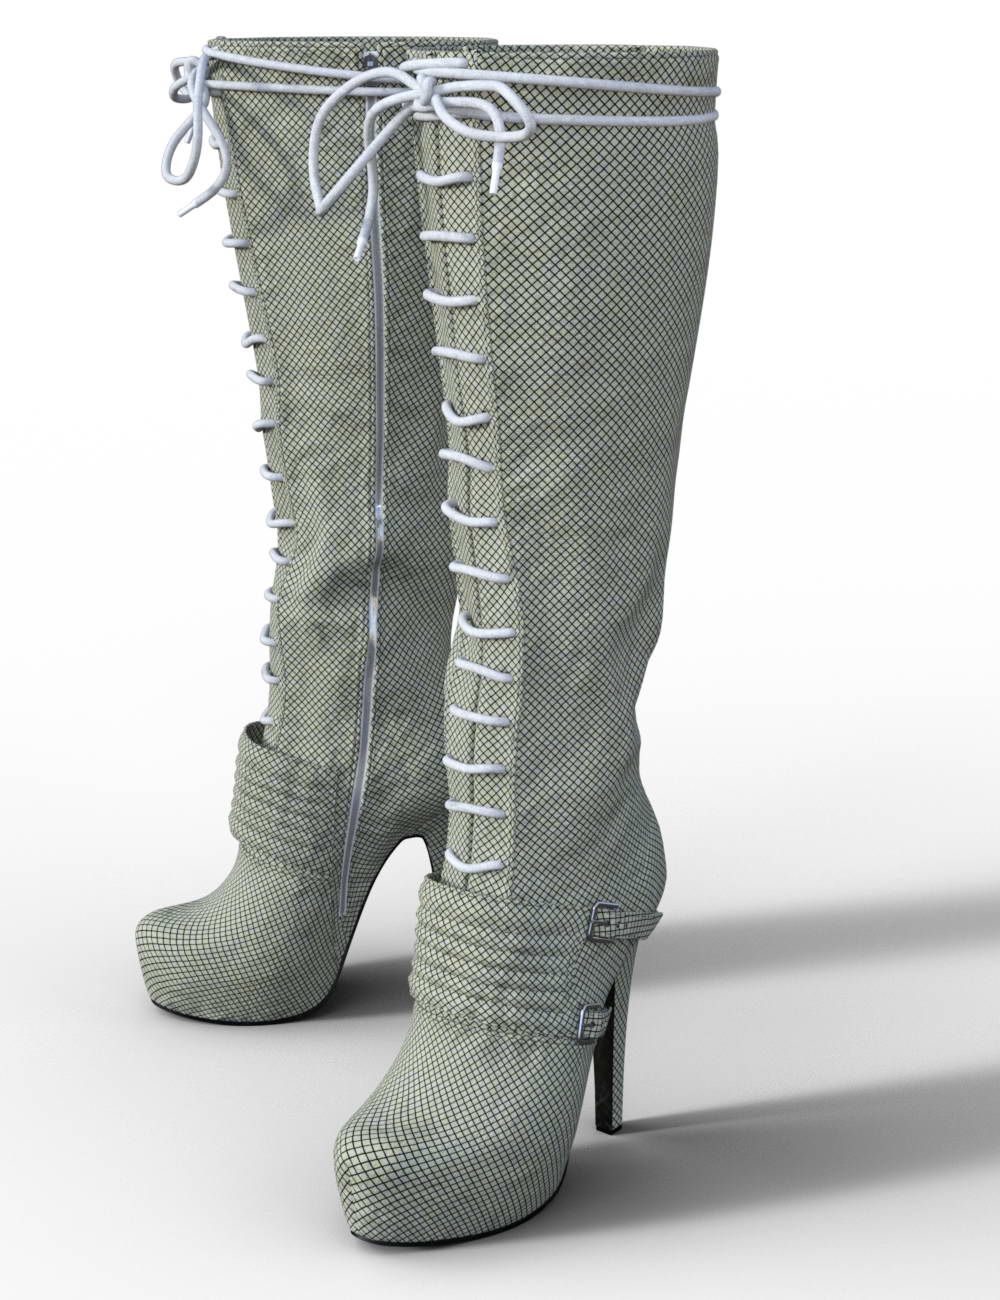 01 platform knee high boot for genesis 3 females daz3d 1711468829